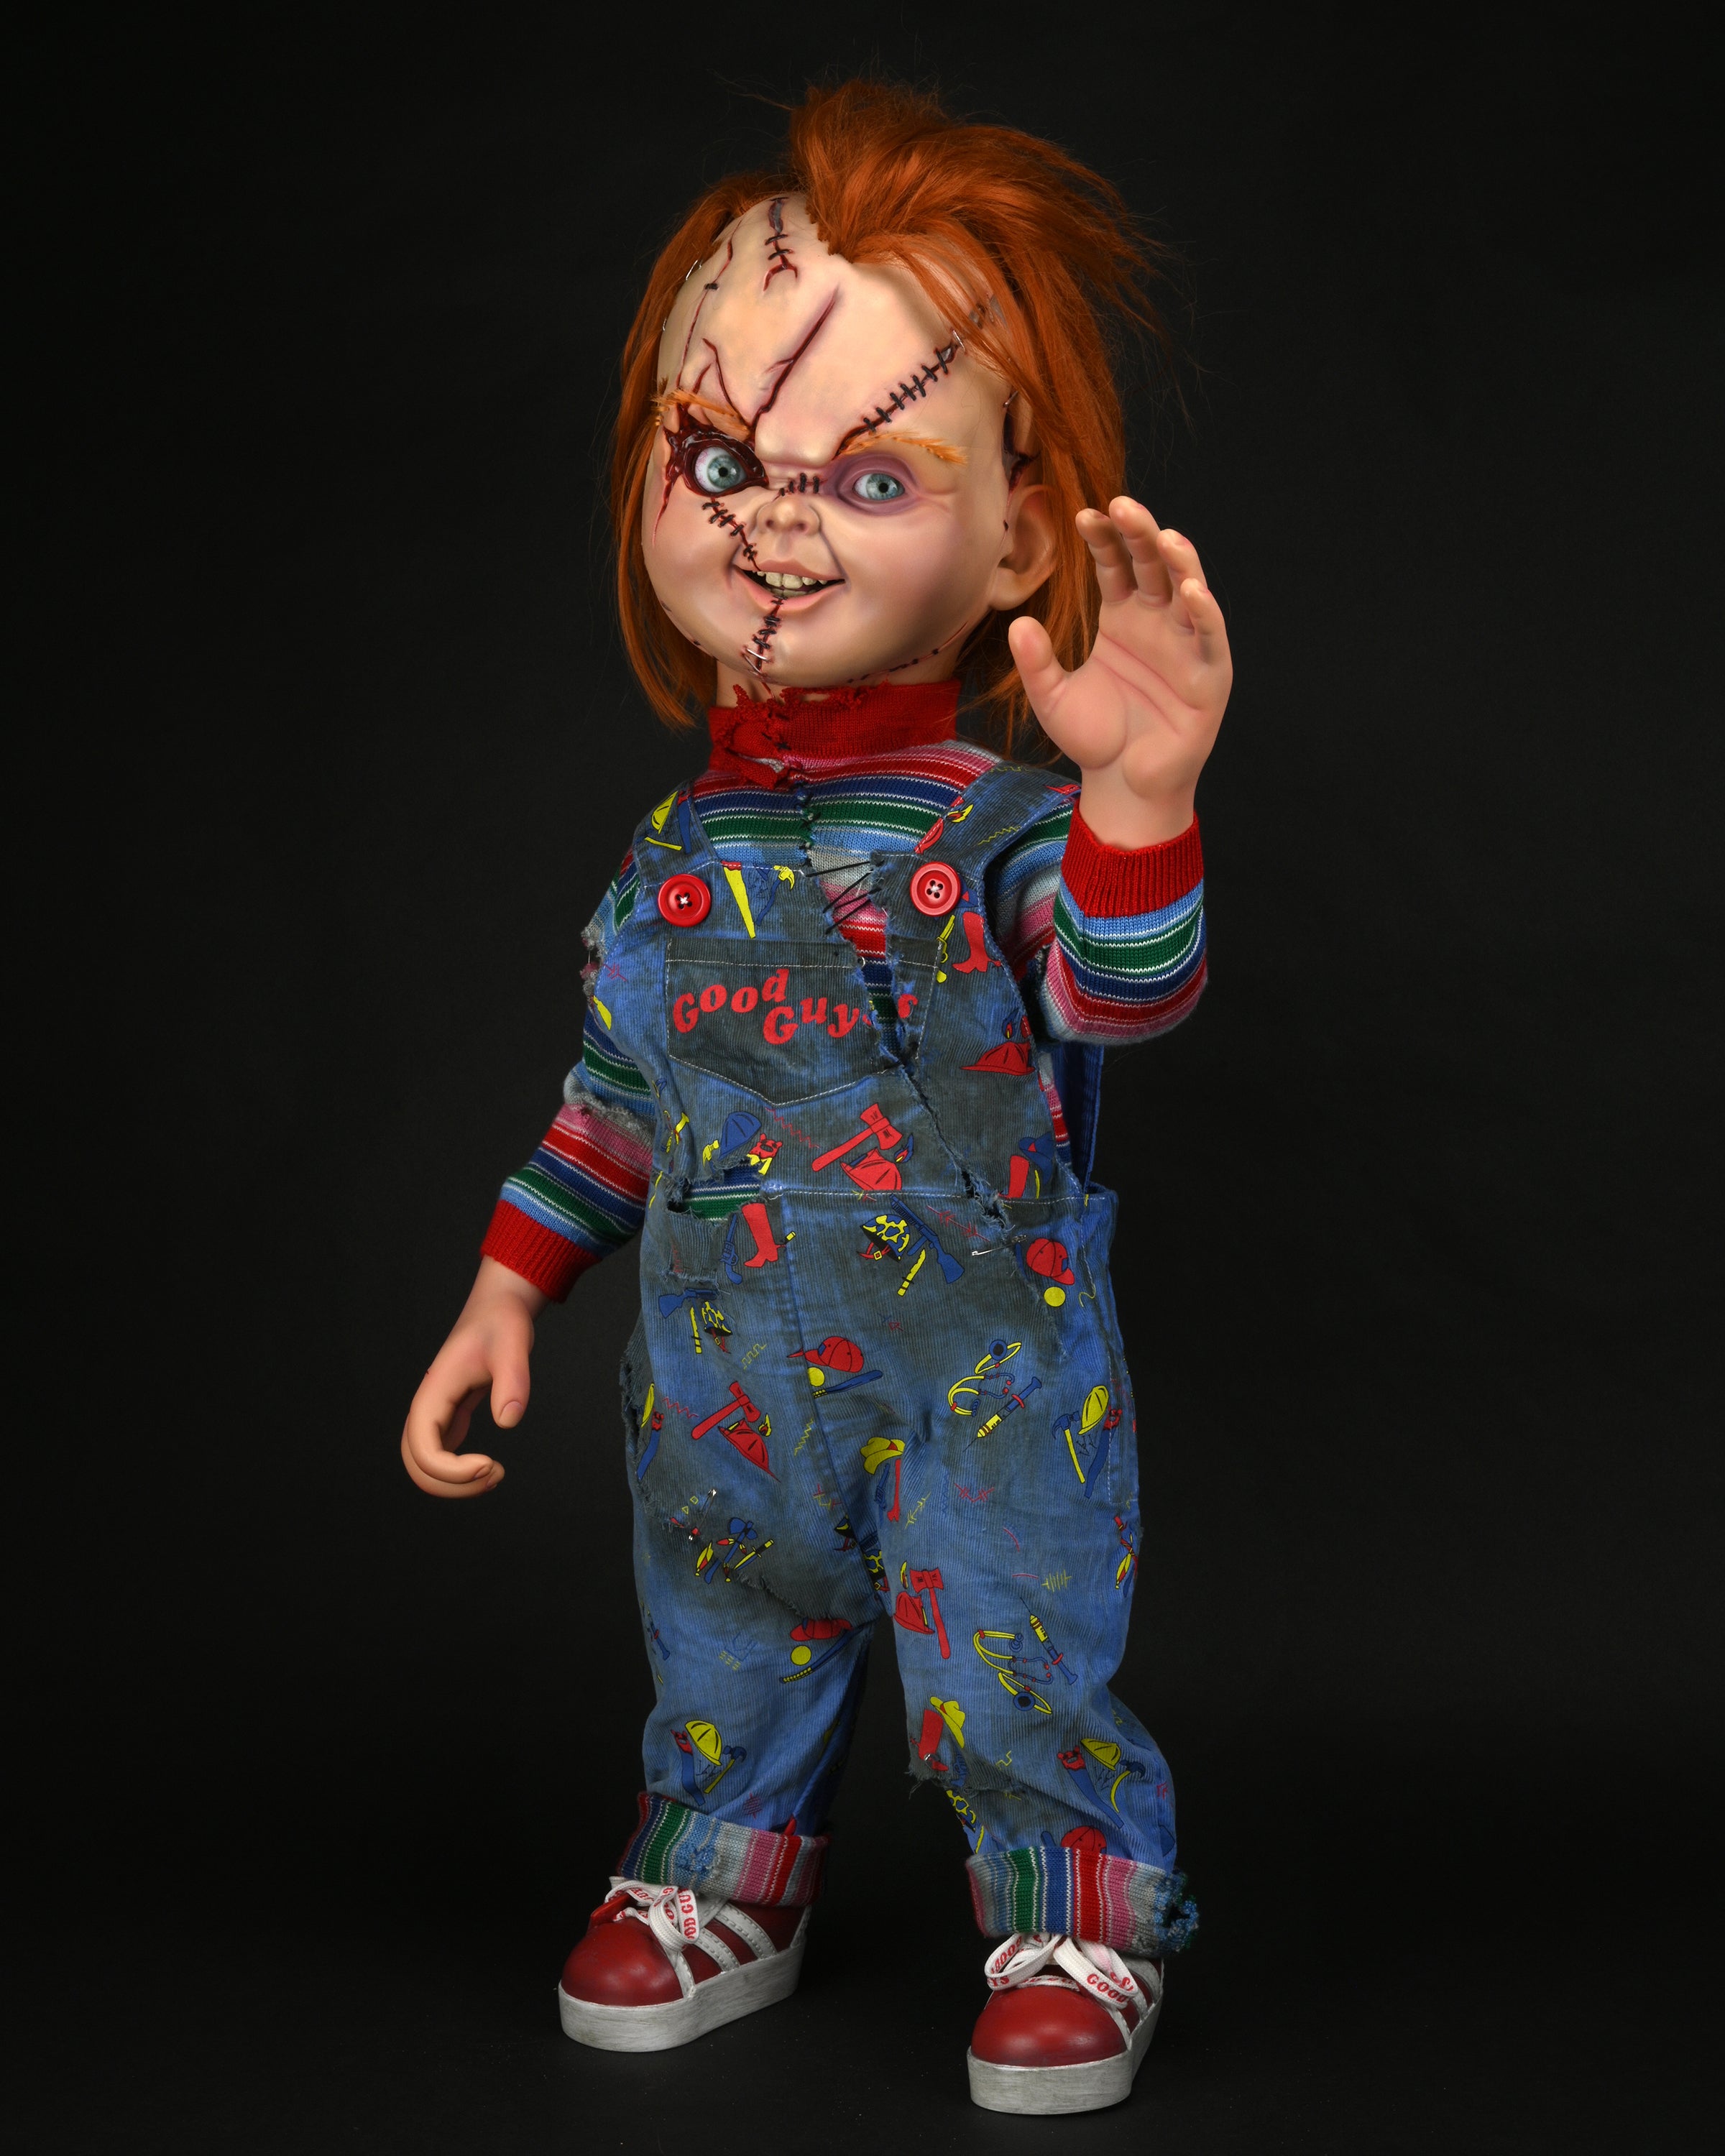 Life-sized Chucky Doll by NECA